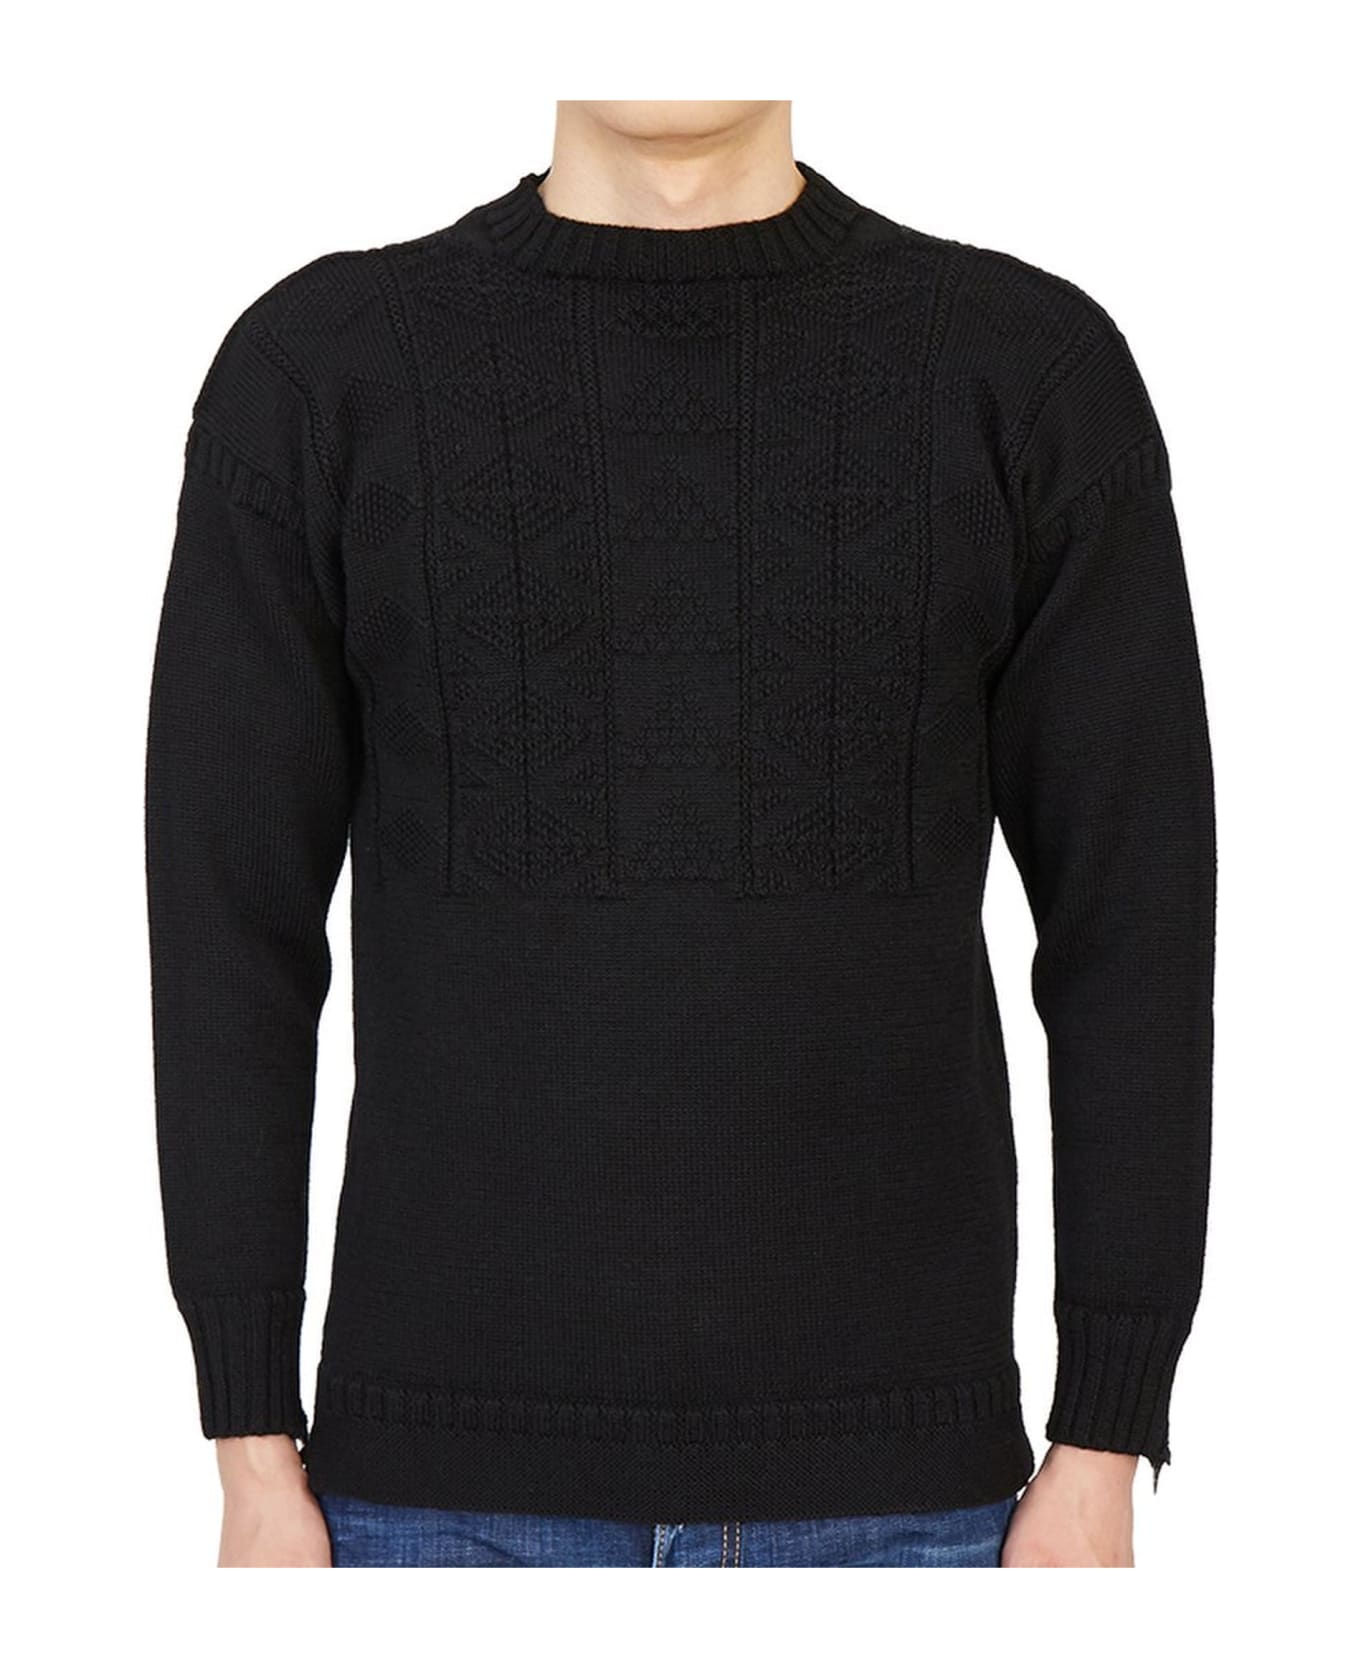 Maison Margiela Wool Sweater - Black